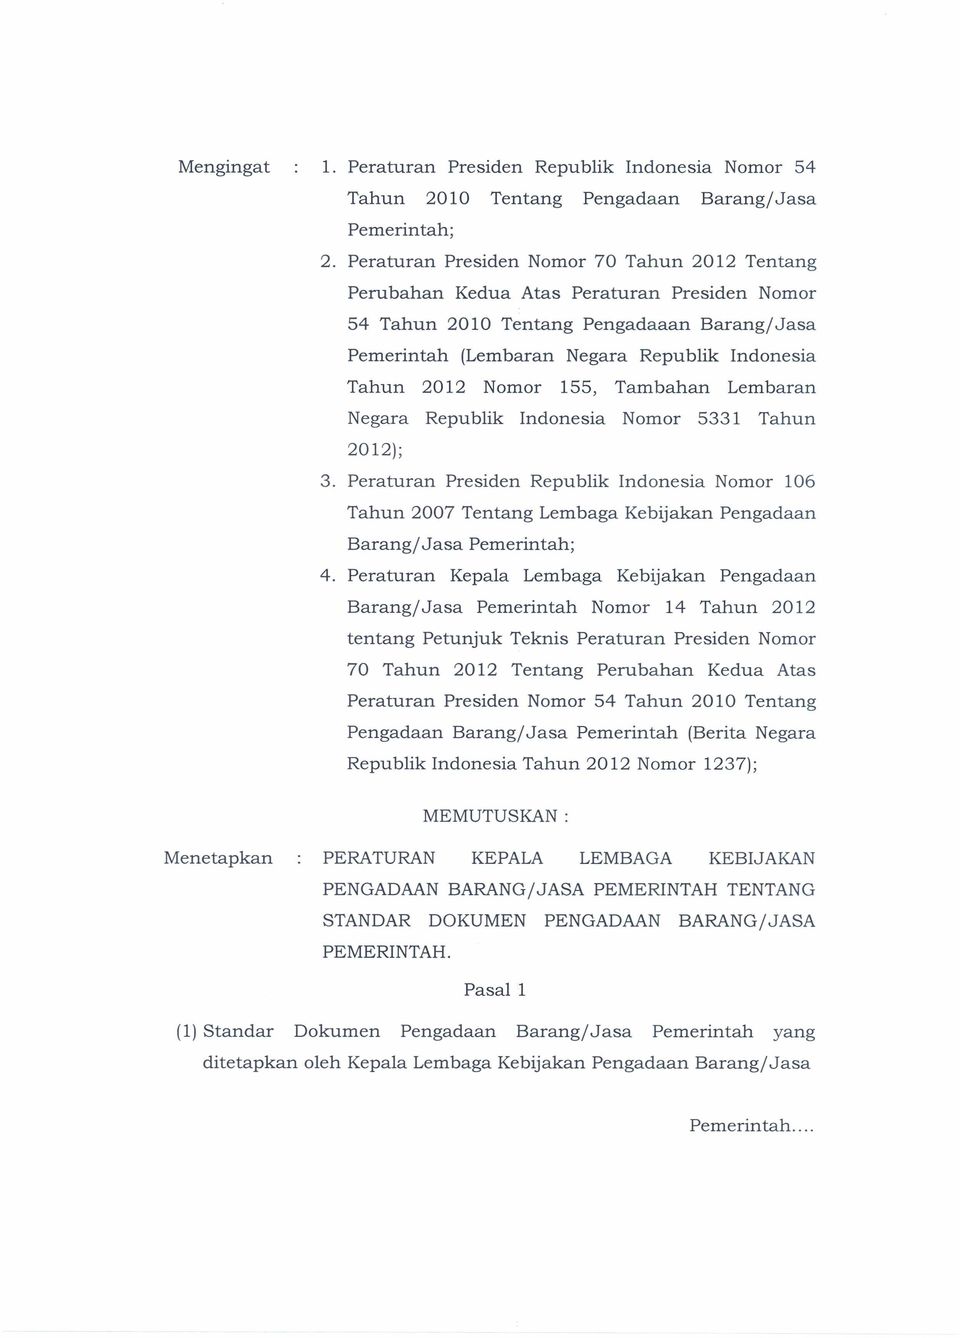 Nomor 155, Tambahan Lembaran Negara Republik Indonesia Nomor 5331 Tahun 2012); 3.